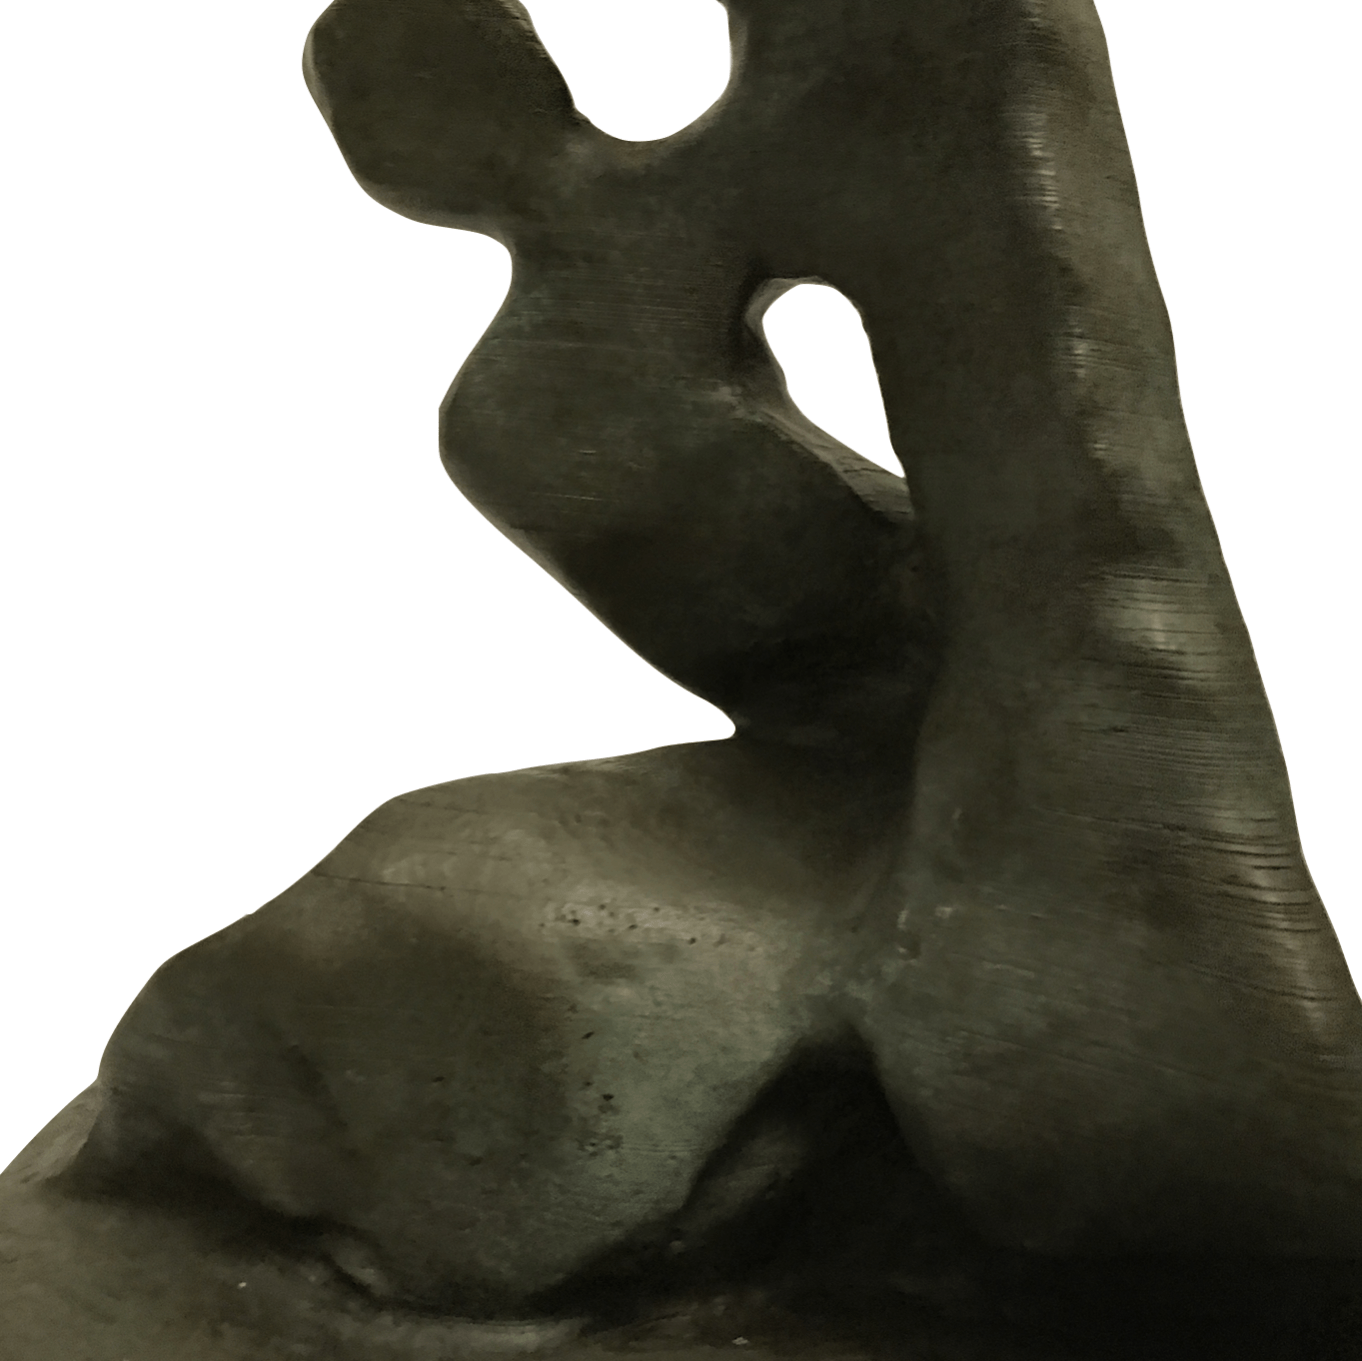 empathy is a bronze figurative sculpture